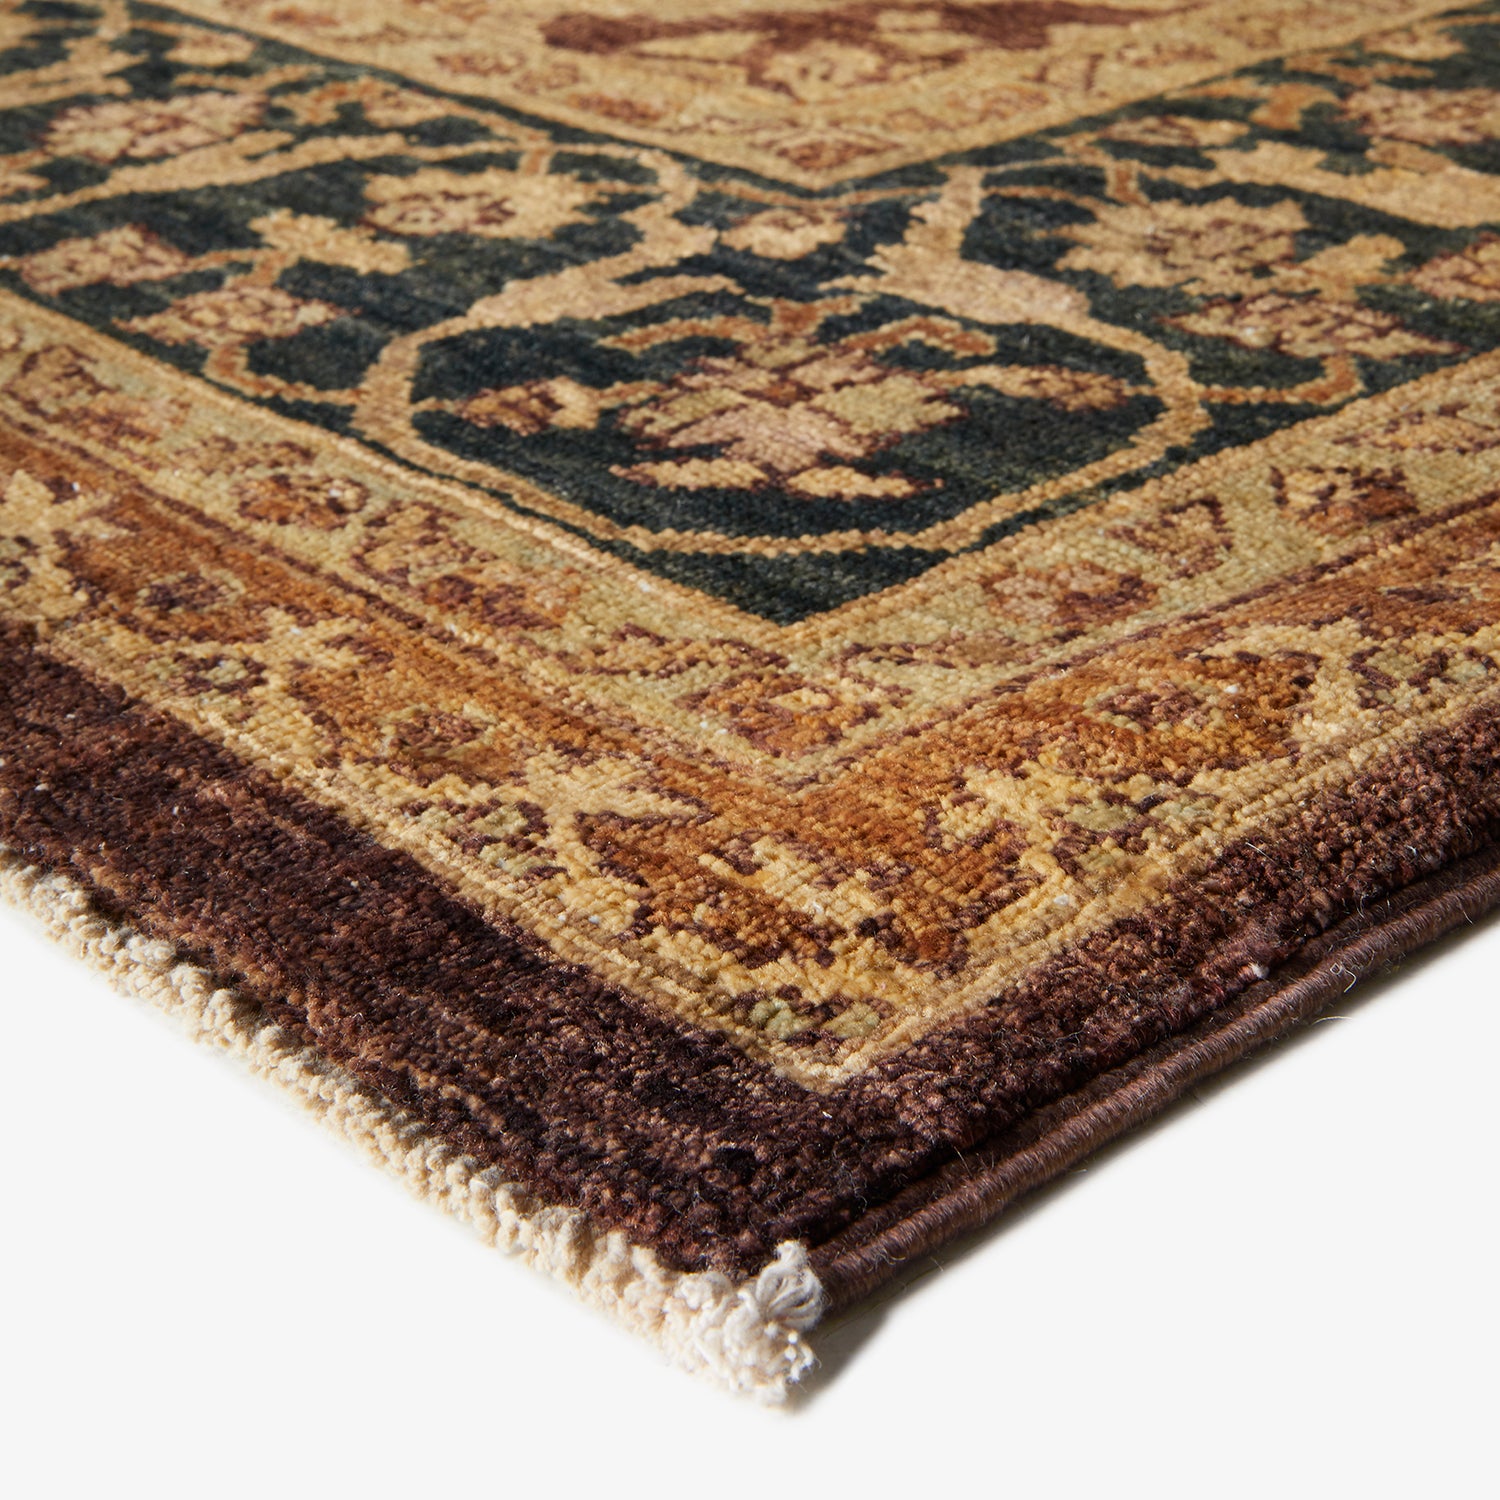 Close-up of a plush, intricately designed area rug with fringe.